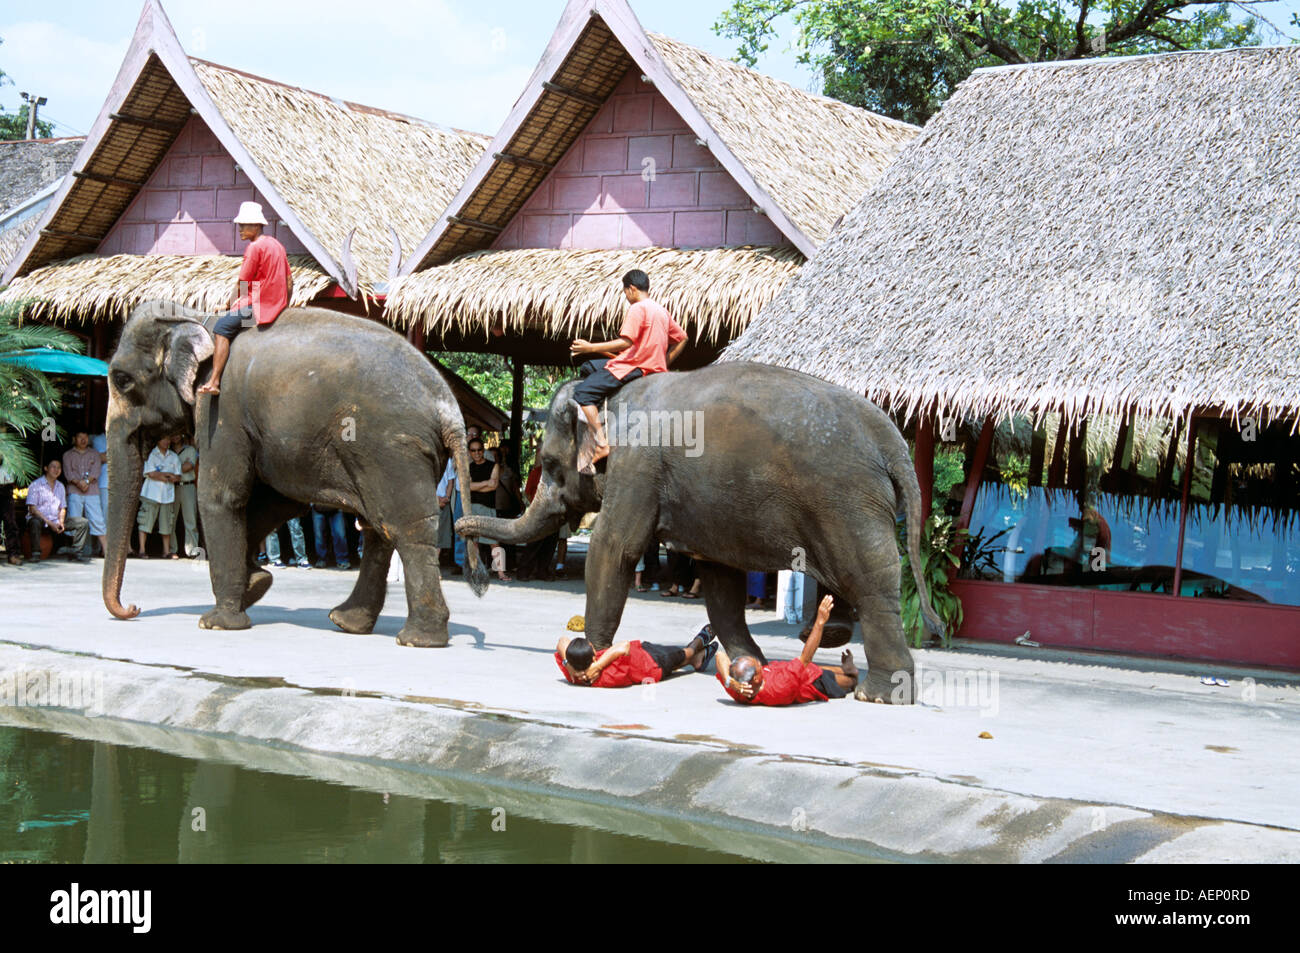 Elephant stepping over people on ground, Riverside Rose Garden, Sampran Nakorn Pathom, near Bangkok, Thailand Stock Photo